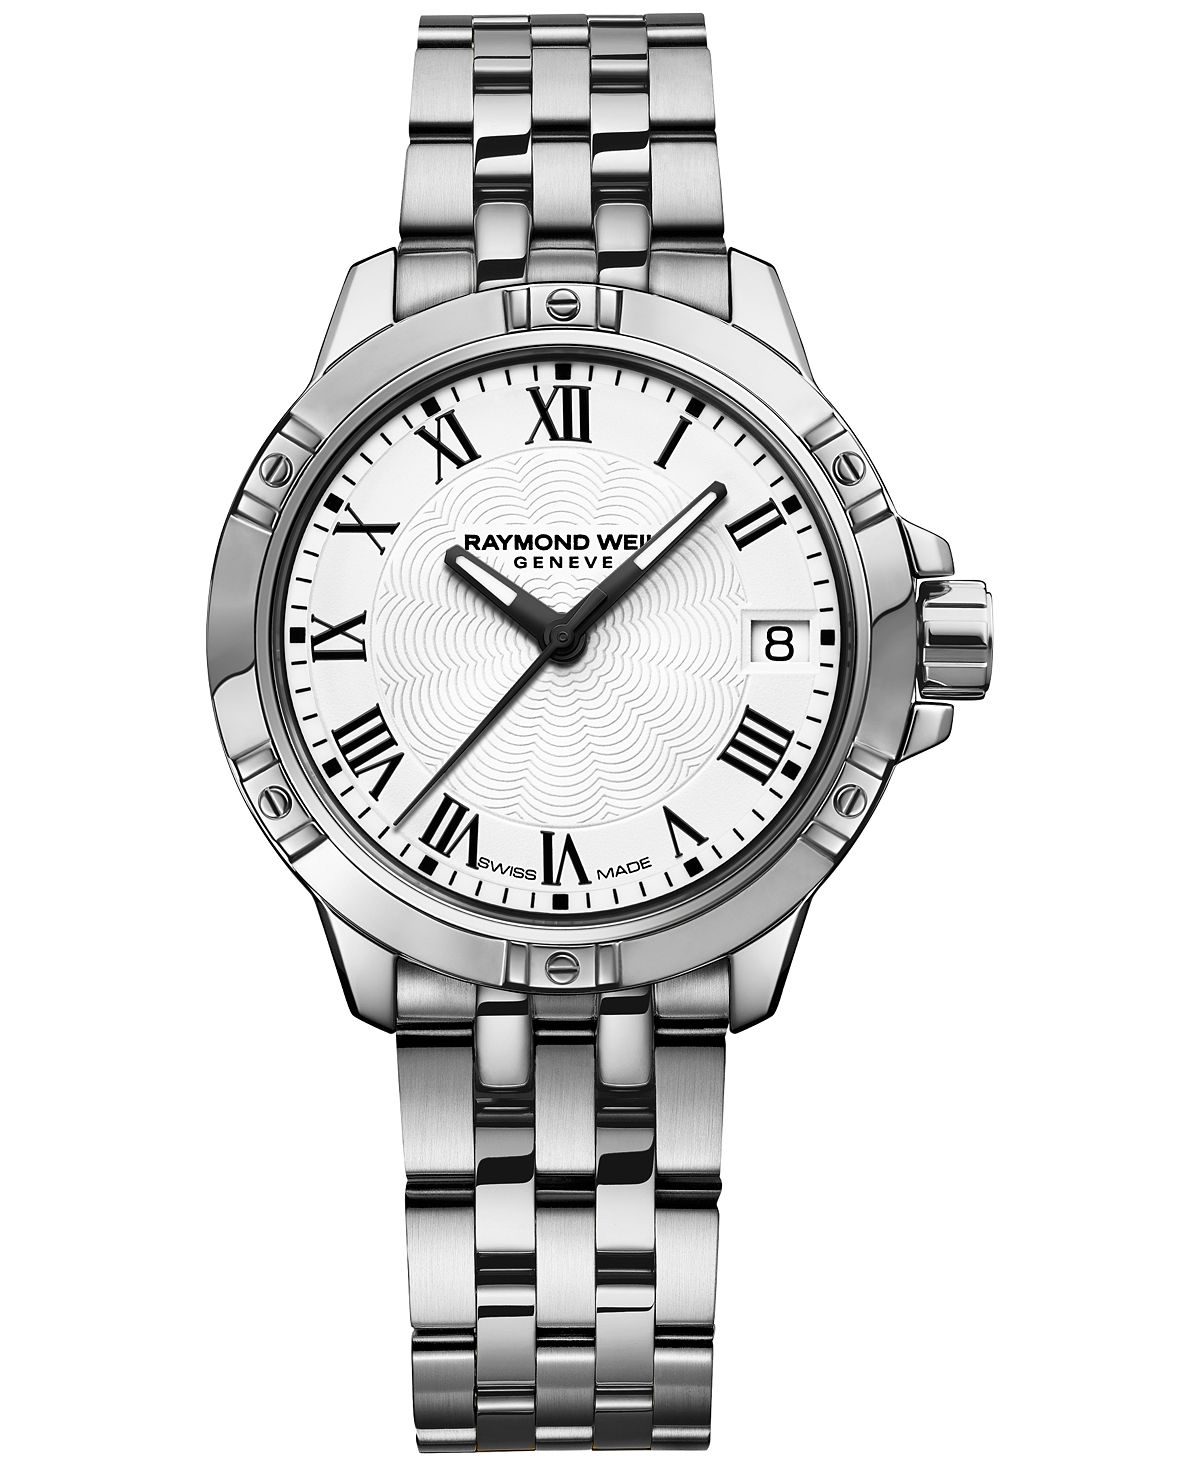 Швейцарские женские часы Tango с браслетом из нержавеющей стали, 30 мм 5960-ST-00300 Raymond Weil, серебро часы raymond weil 5960 st 46001